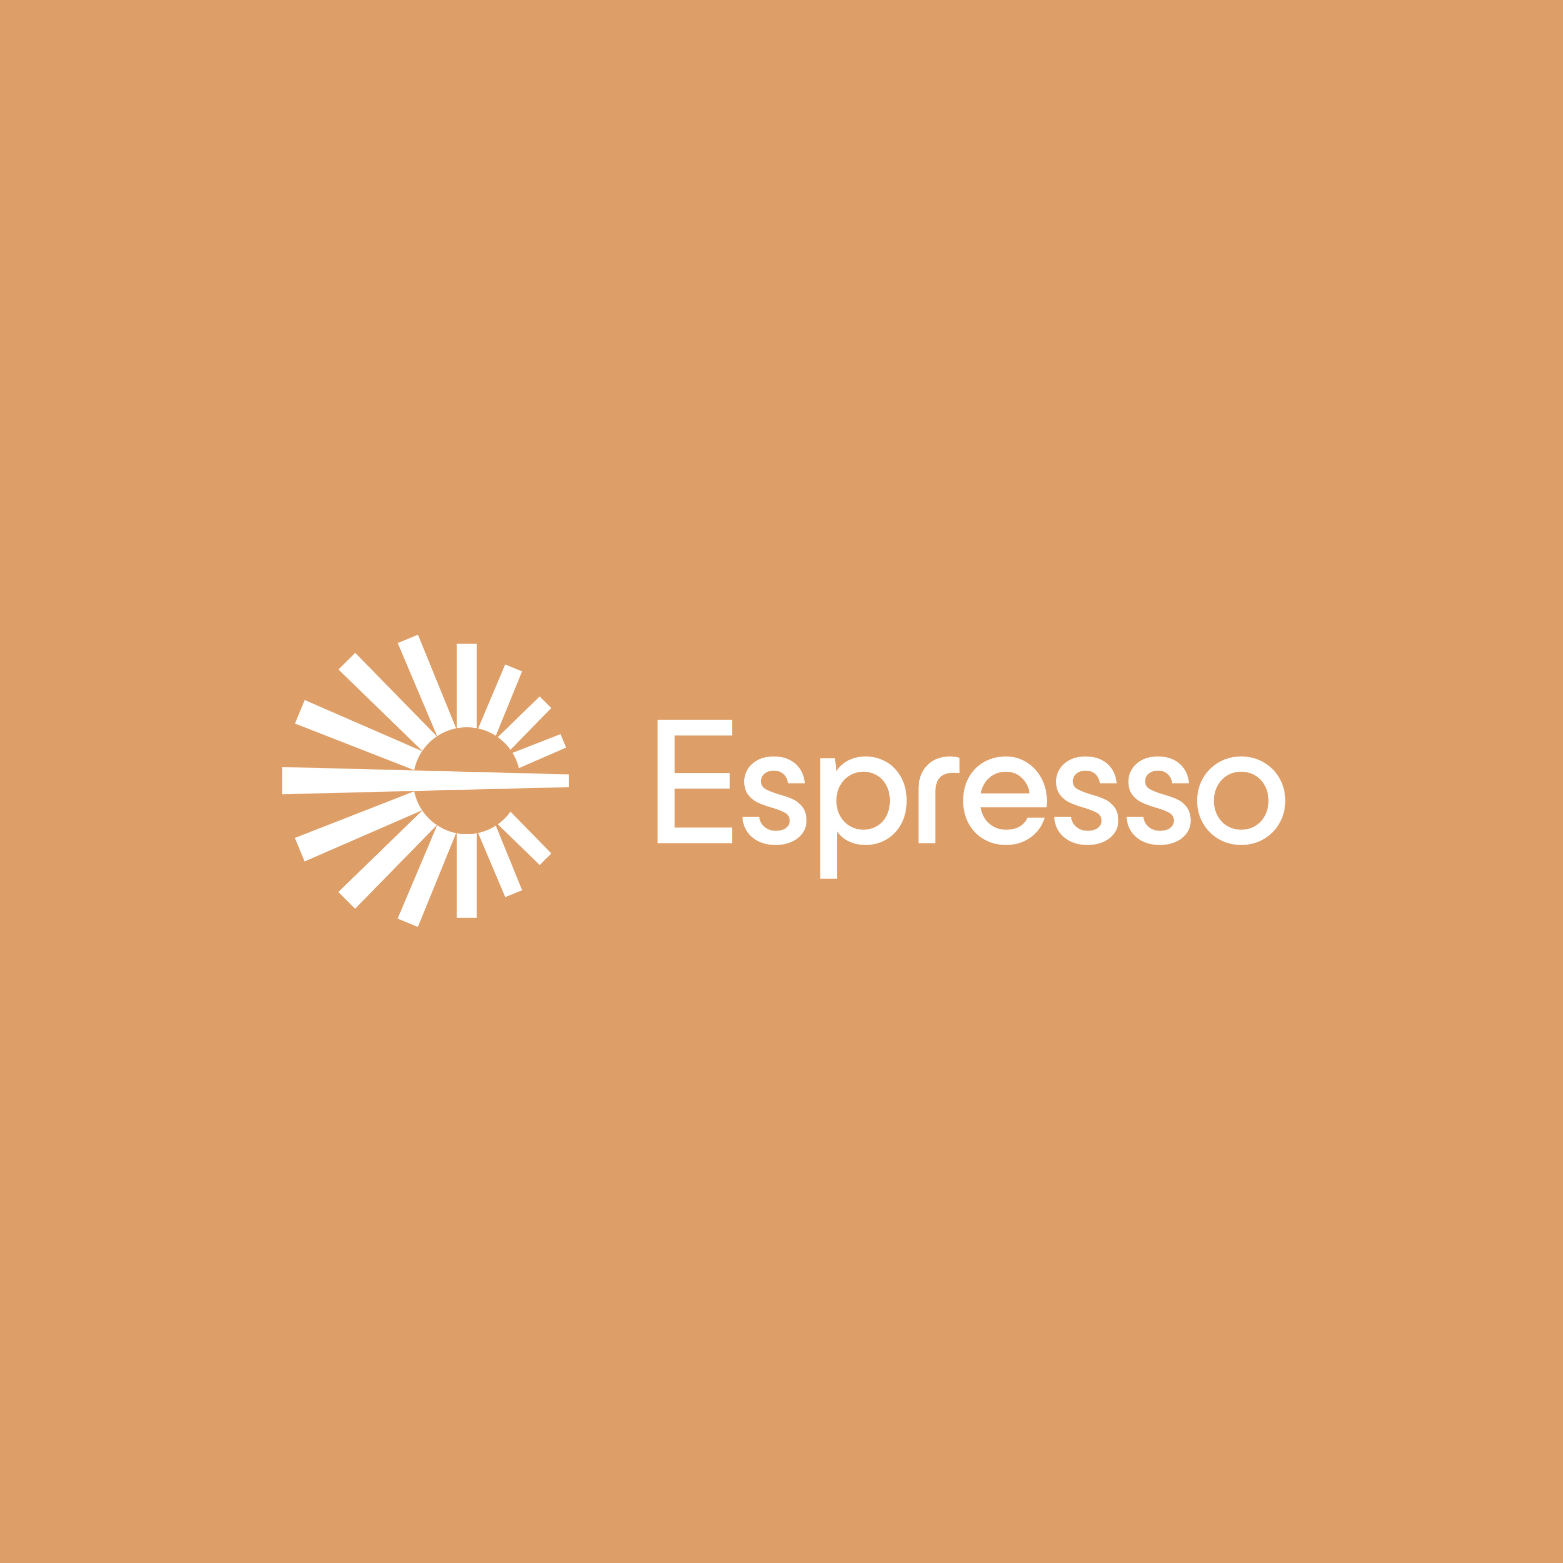 Espresso Systems